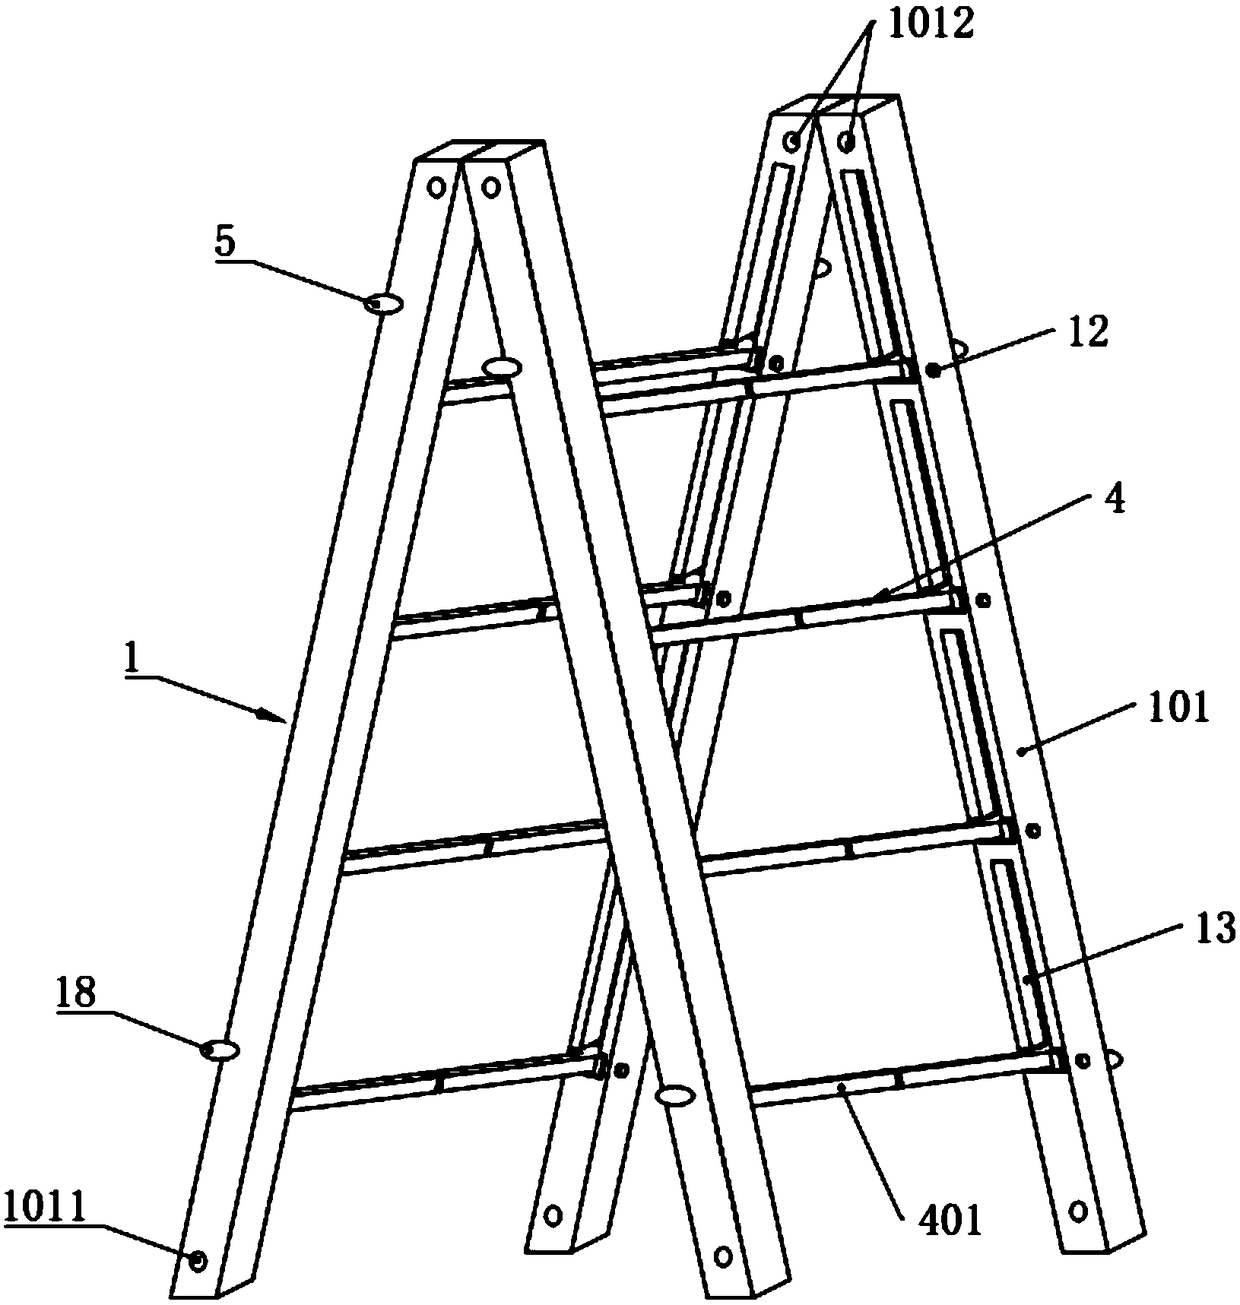 Portable insulation herringbone ladder platform capable of being assembled